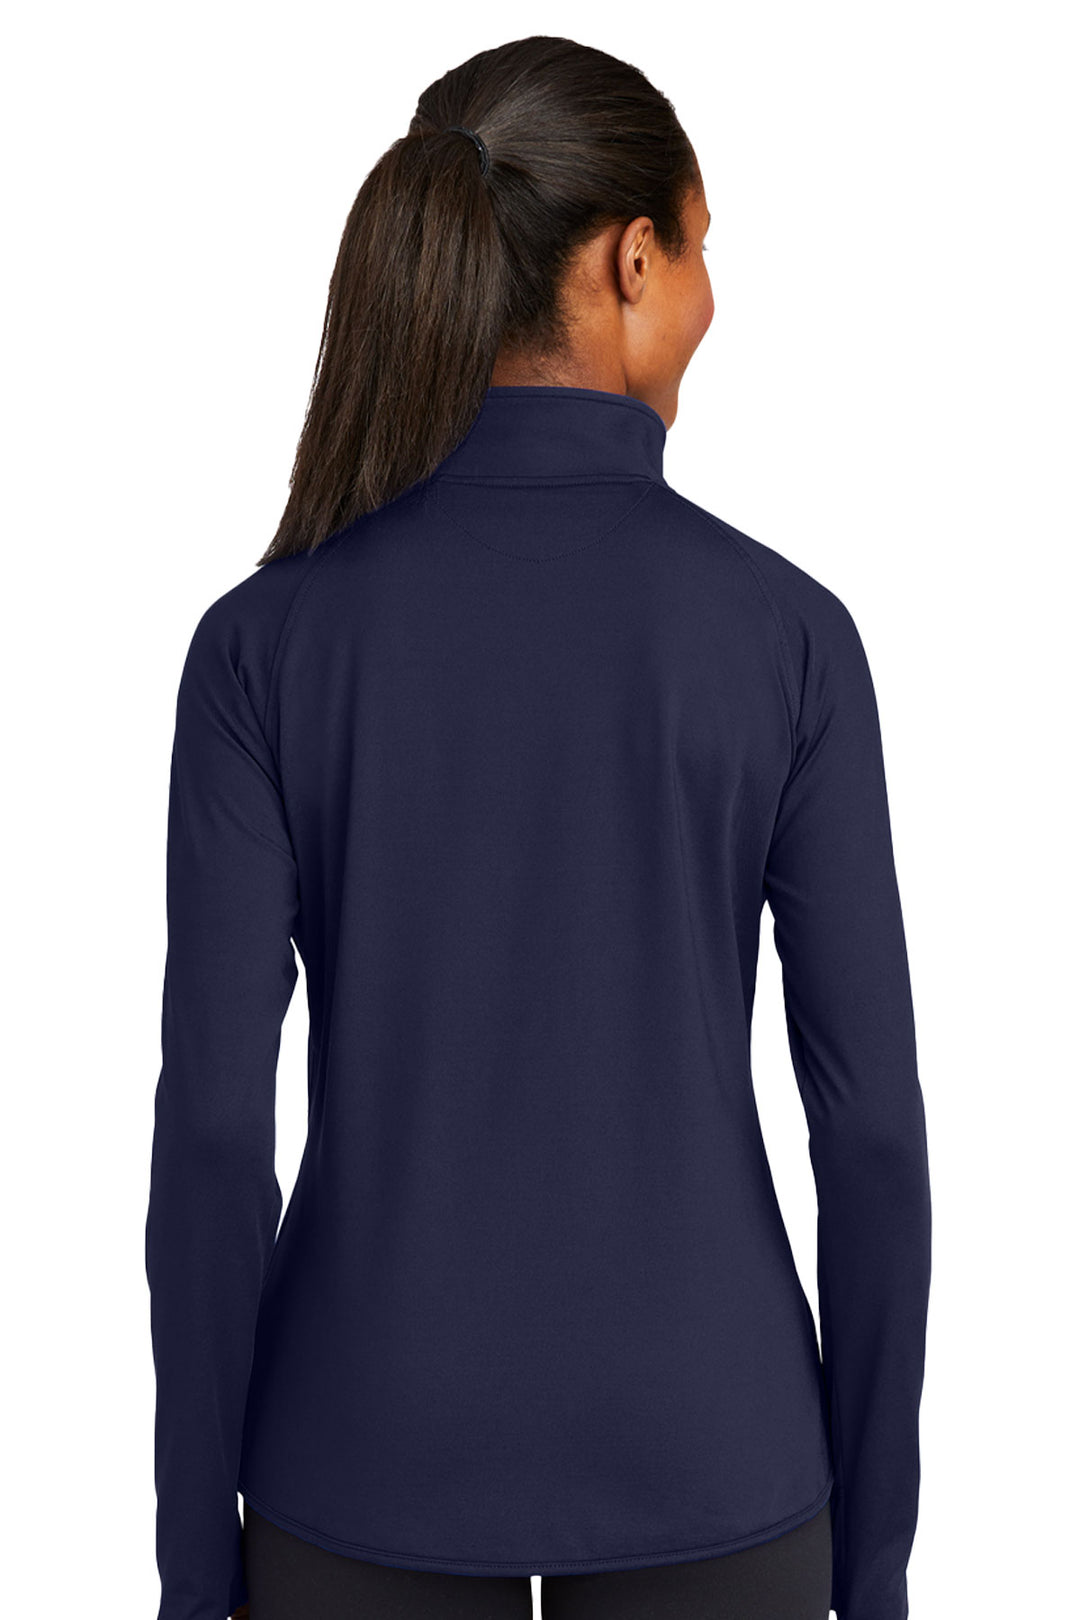 Ladies Sport-Wick Stretch 1/4-Zip Pullover